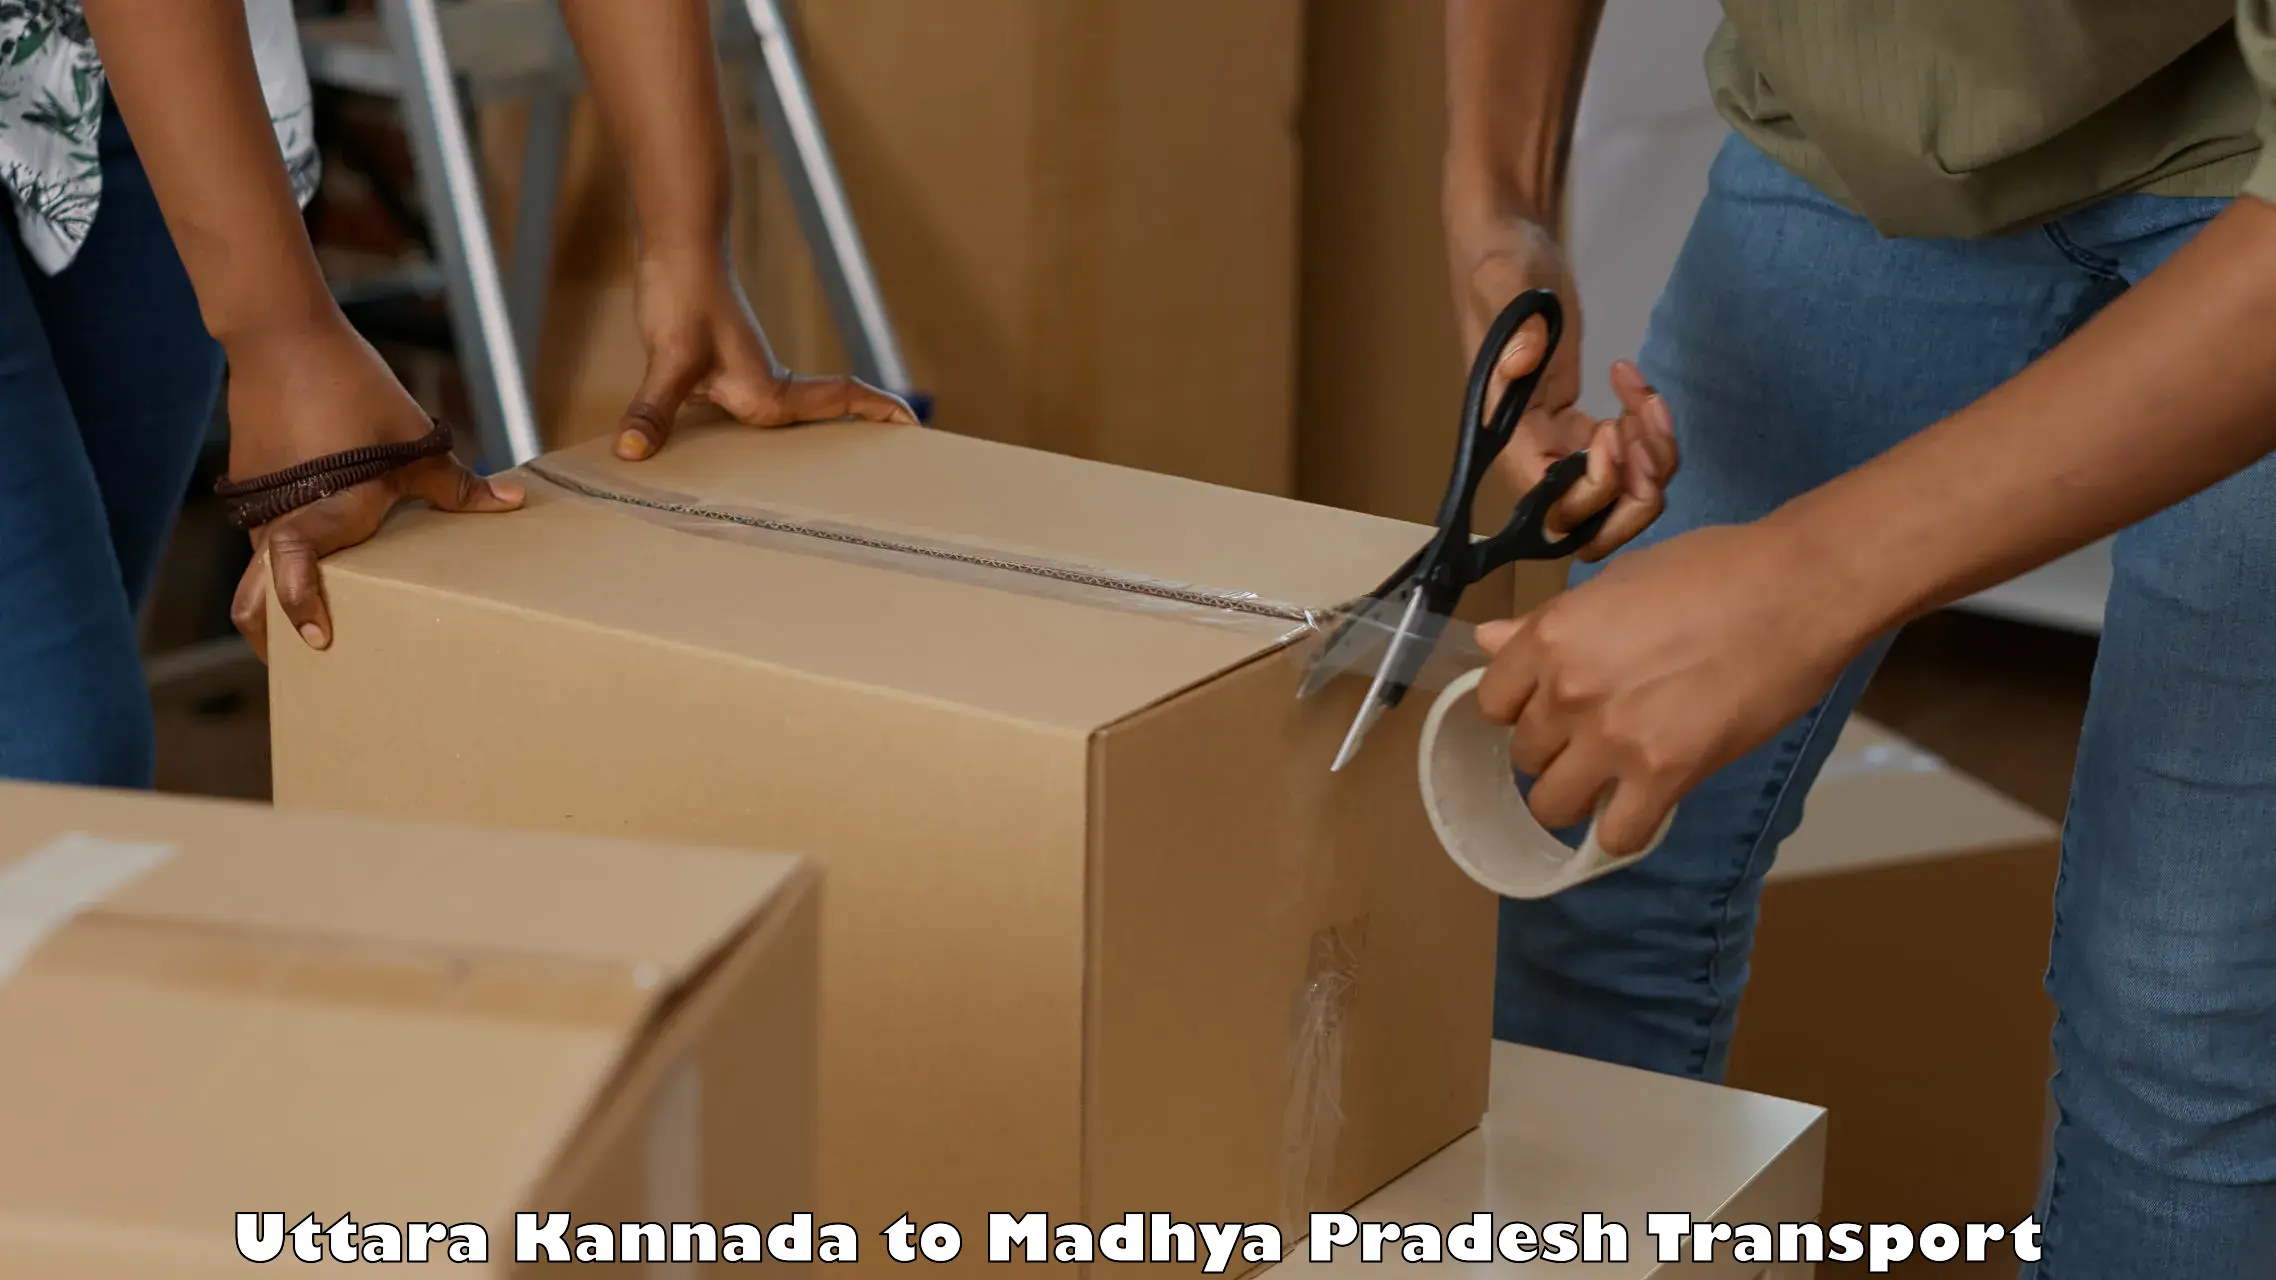 Goods delivery service Uttara Kannada to Silwani